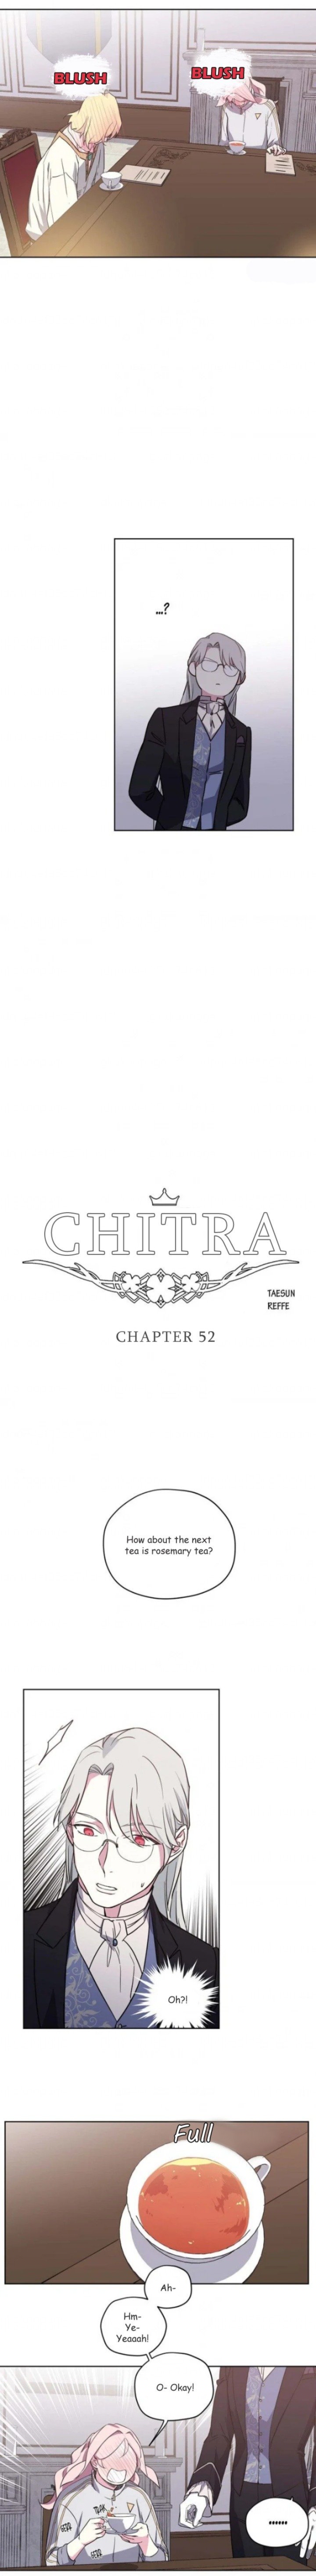 chitra_52_2